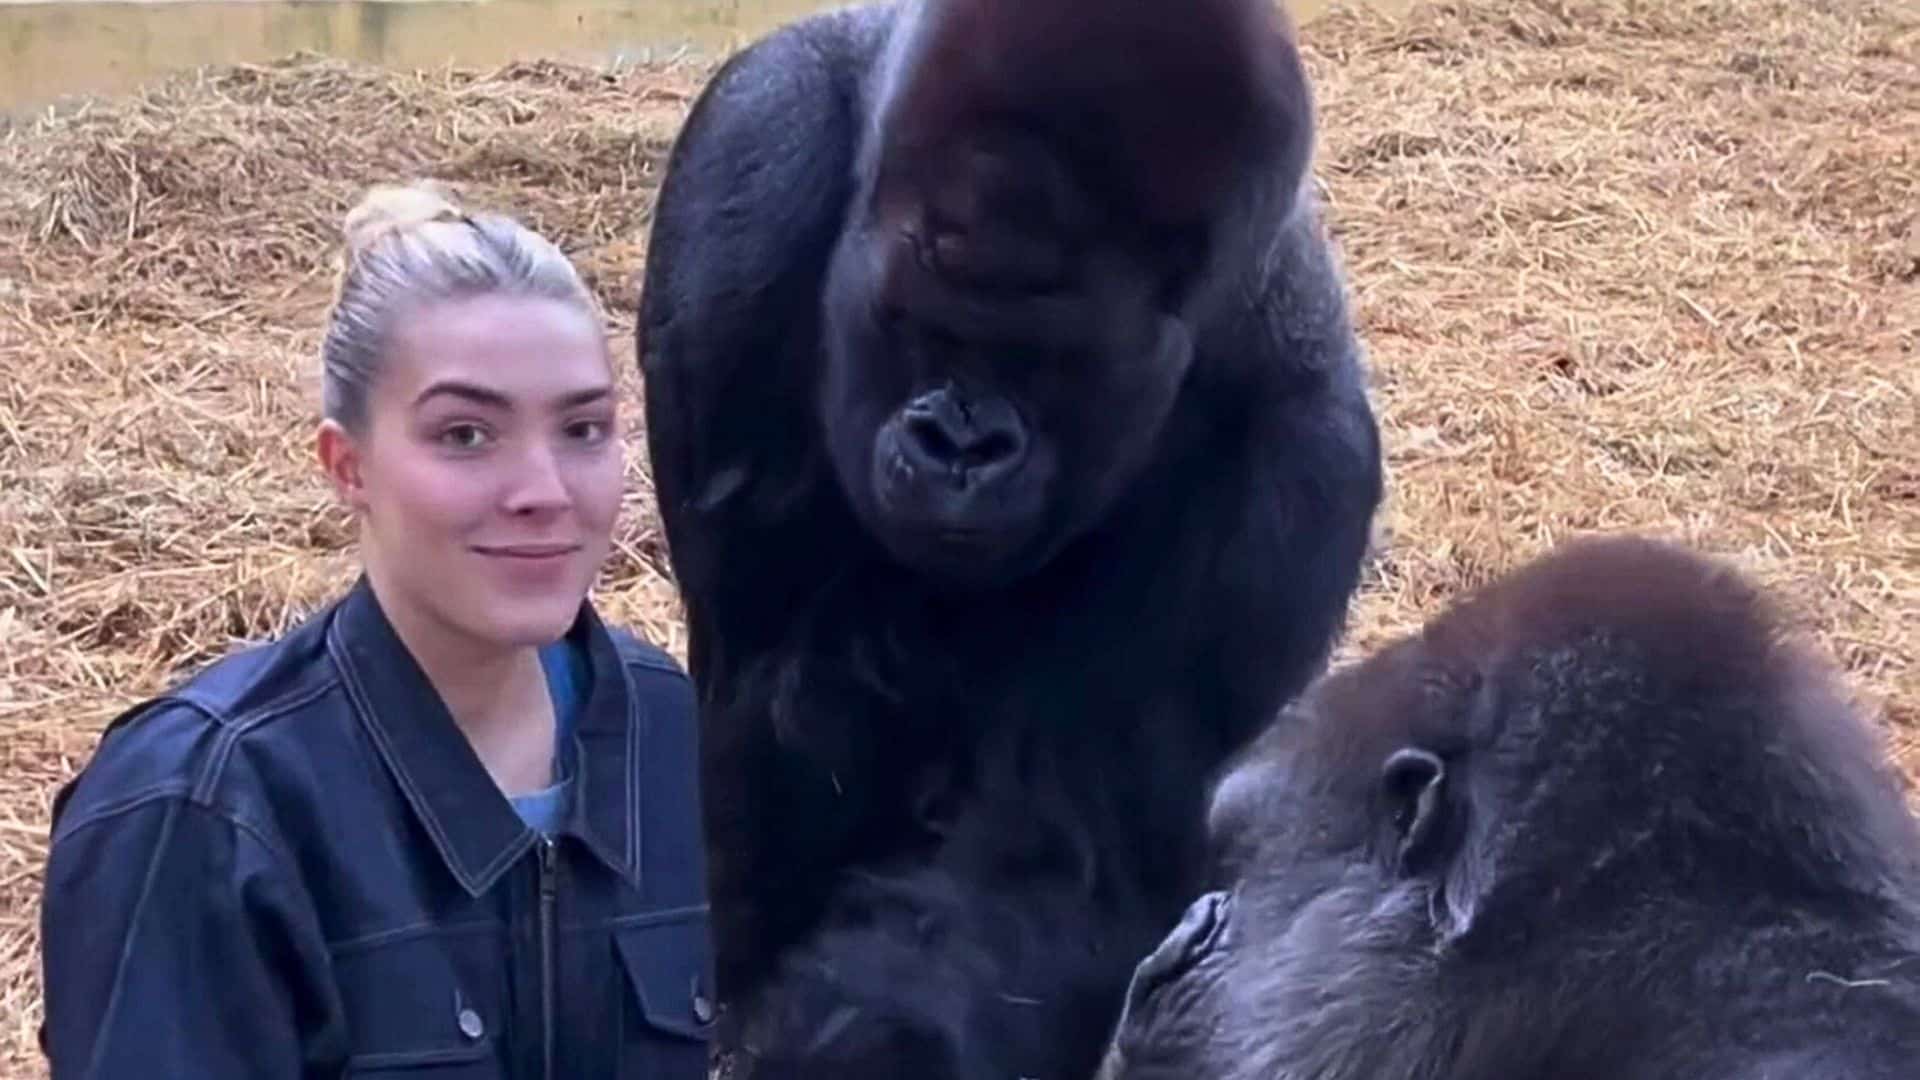 Woman Feeds Treats to Gorillas